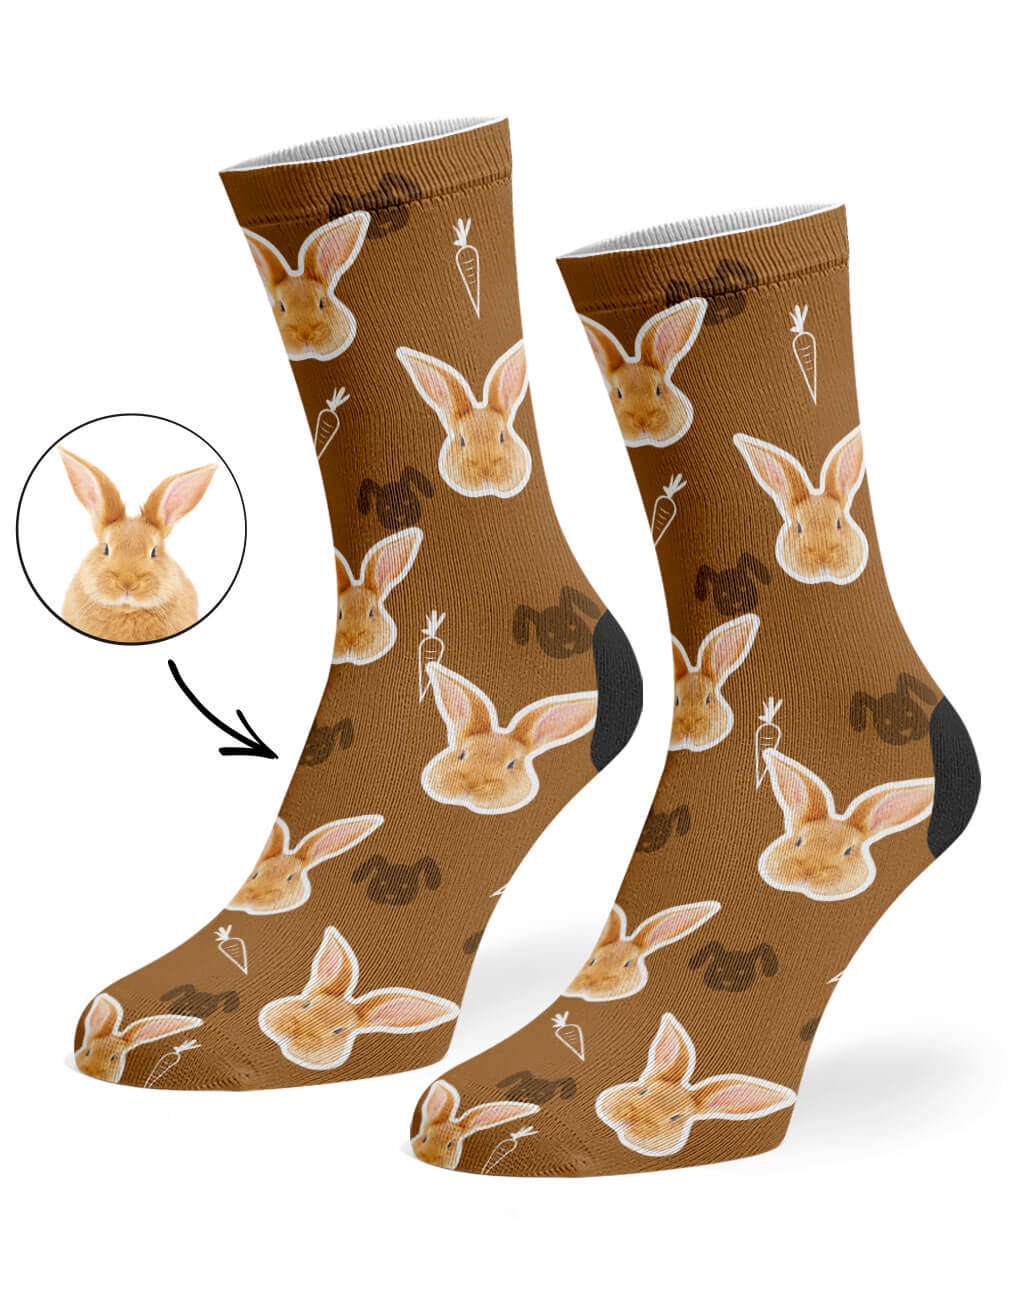 Your Rabbit on Custom Socks